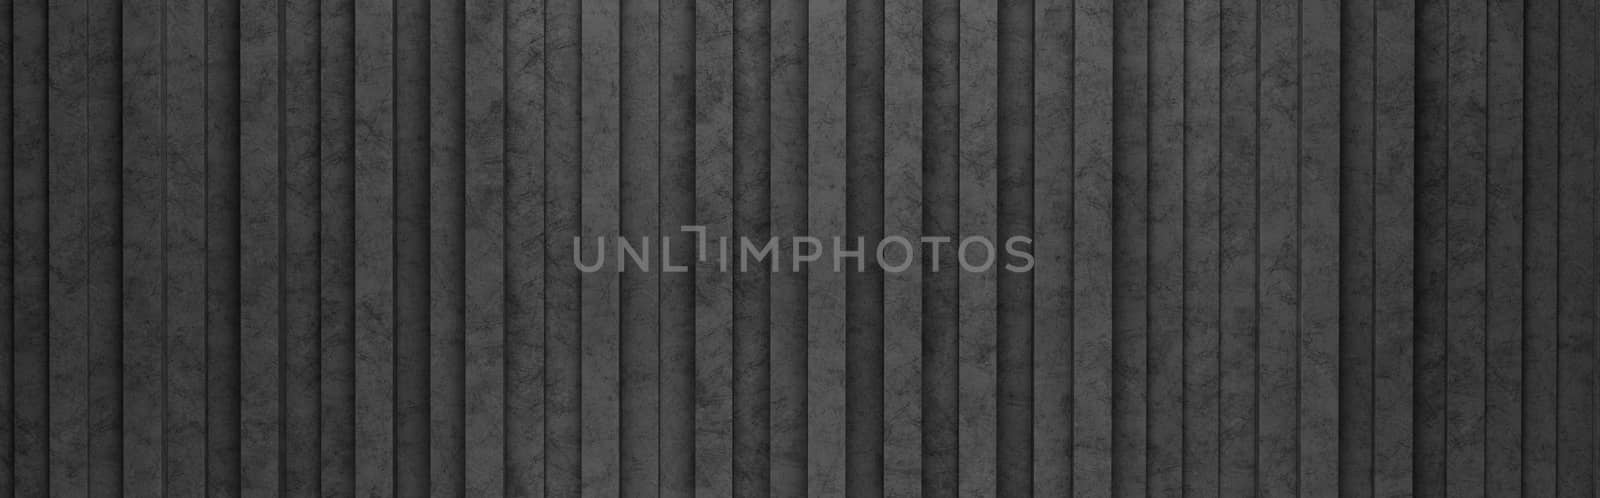 Wall of Black Vertical Stripes Arranged in Random Height 3D Pattern Background Illustration